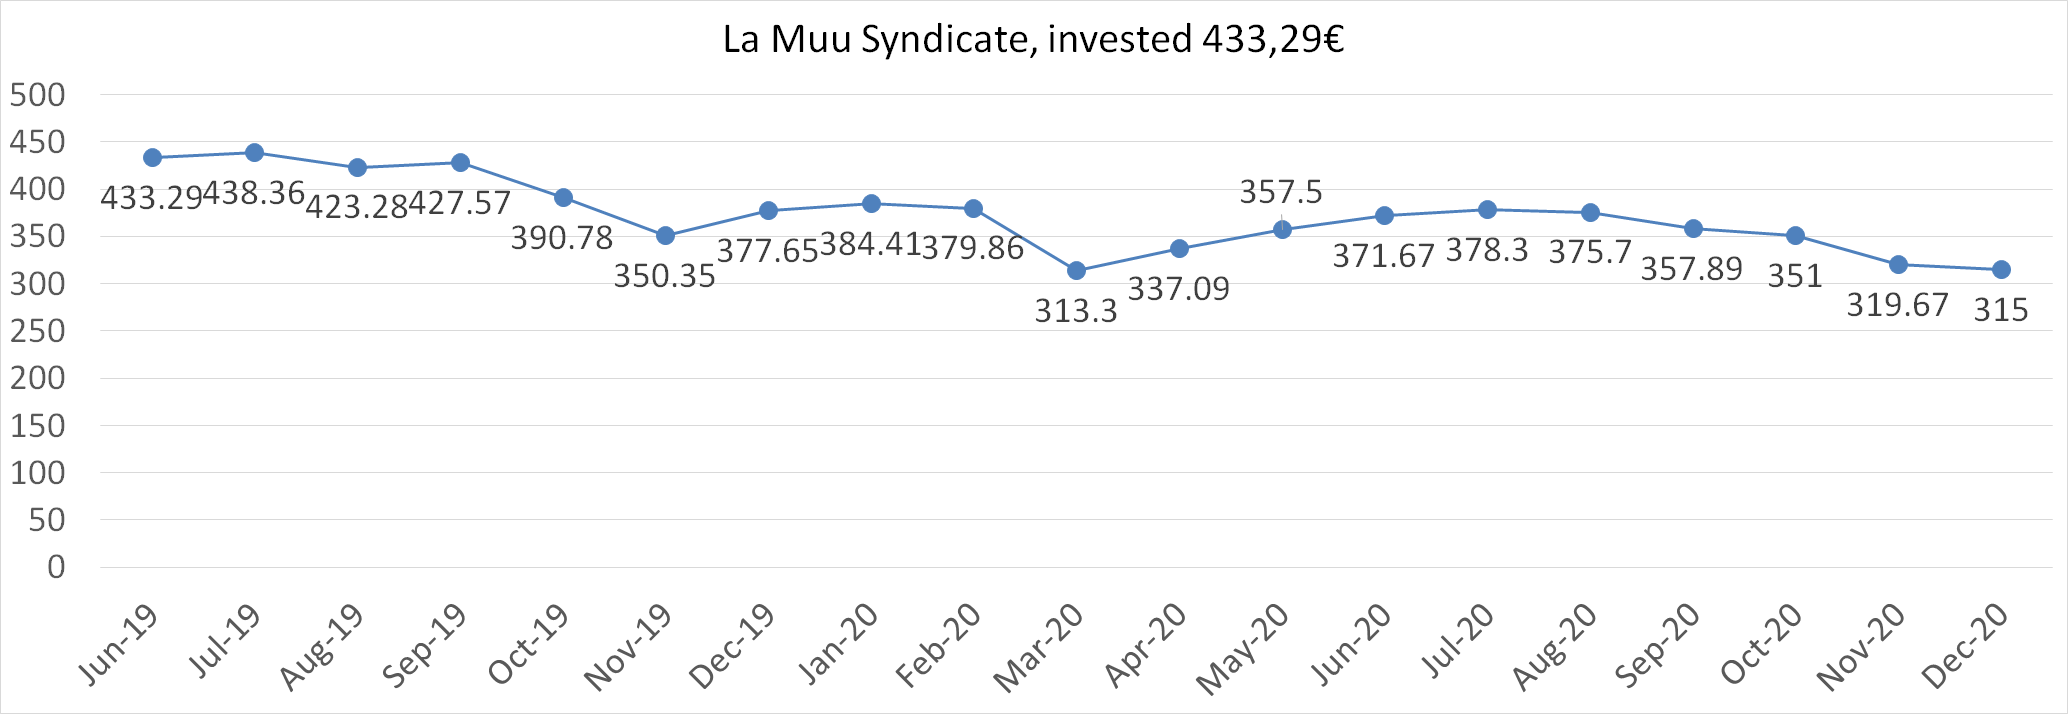 La Muu Syndicate worth in december 2020